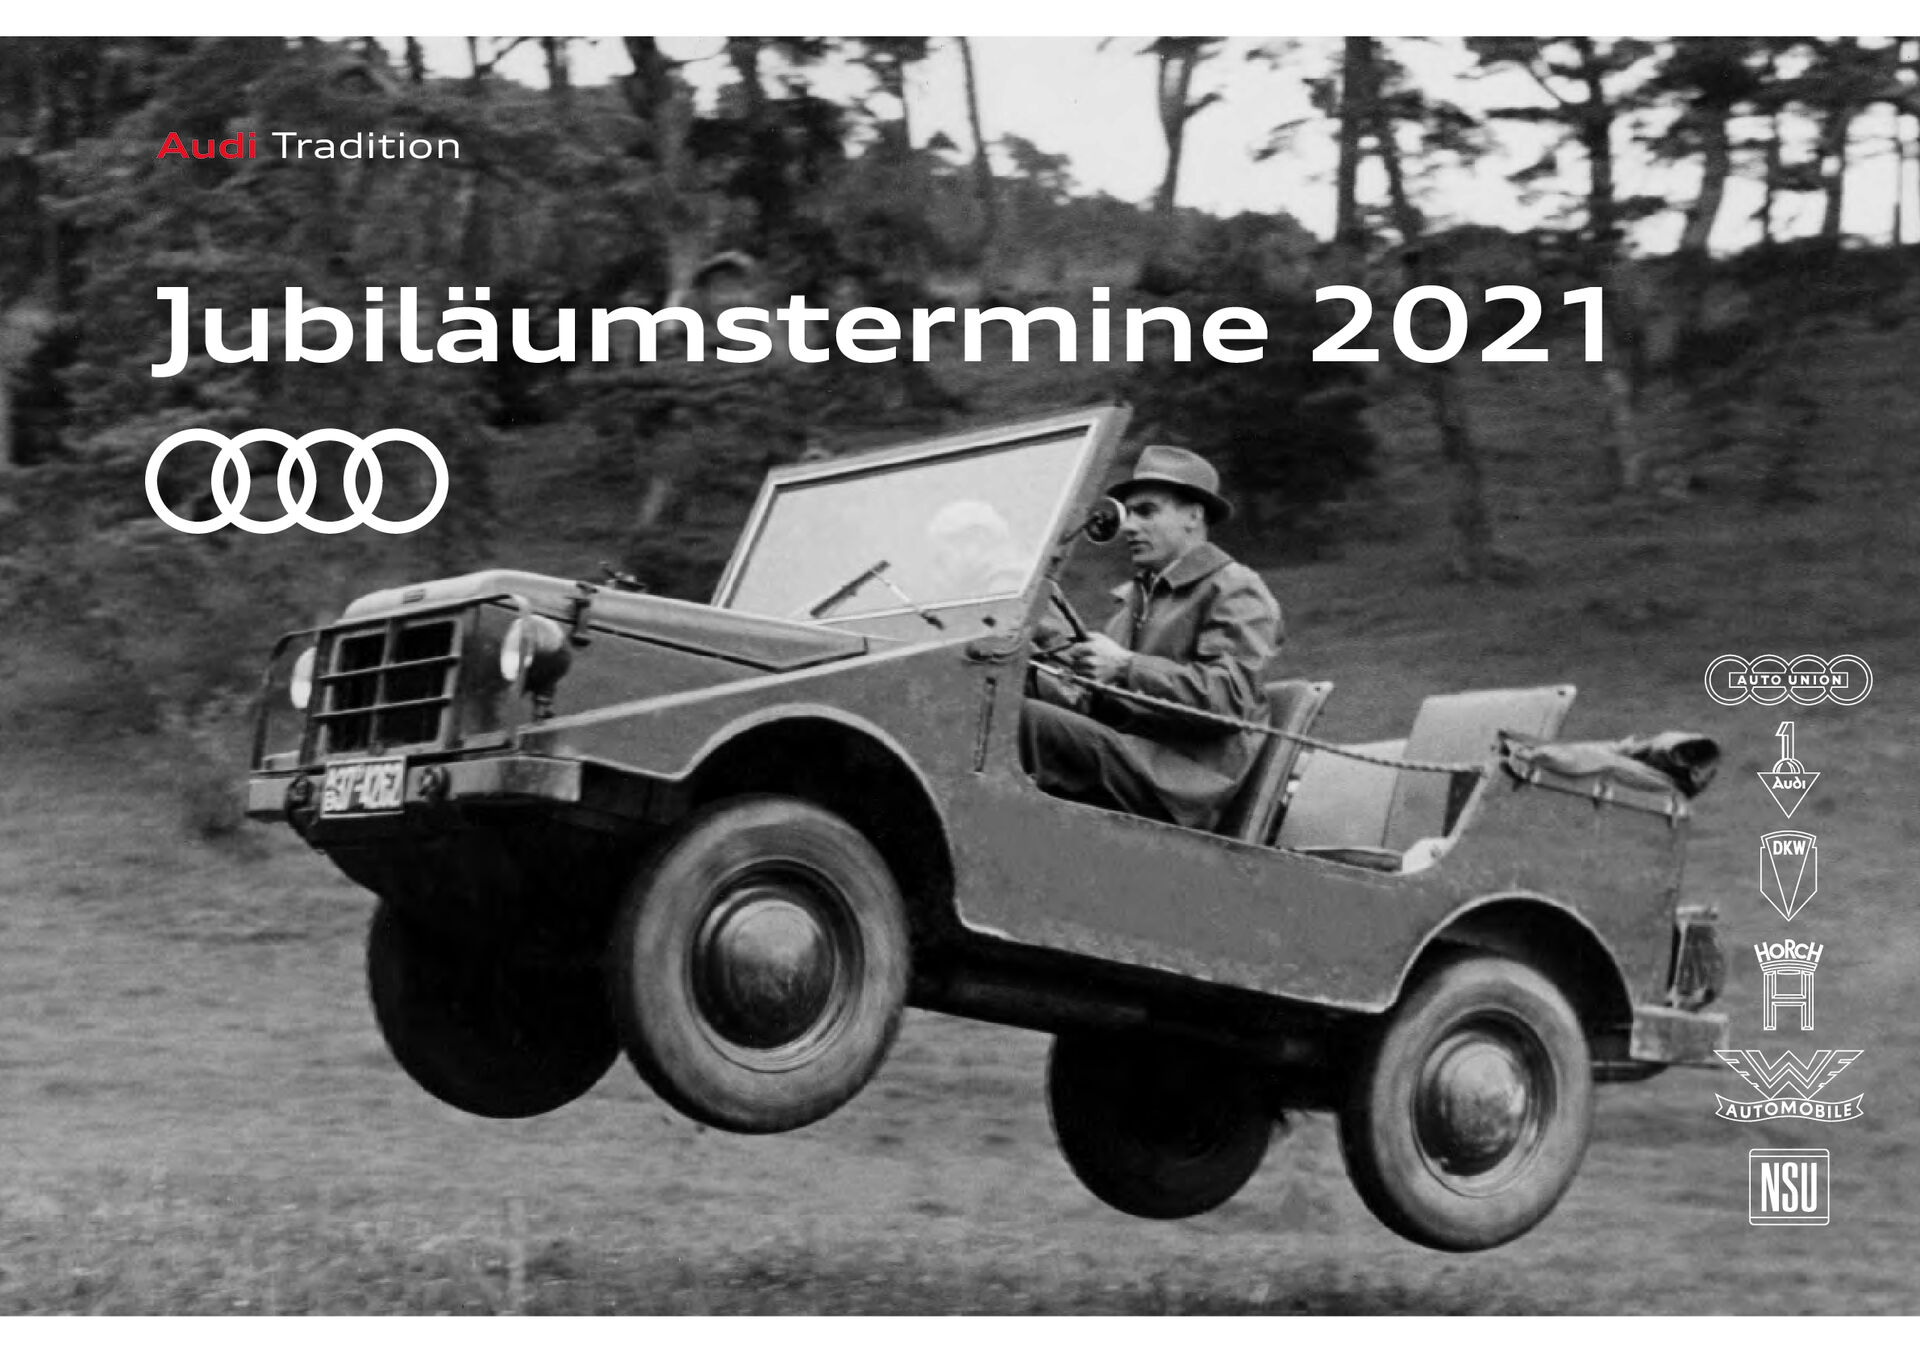 Audi Jubiläumstermine 2021